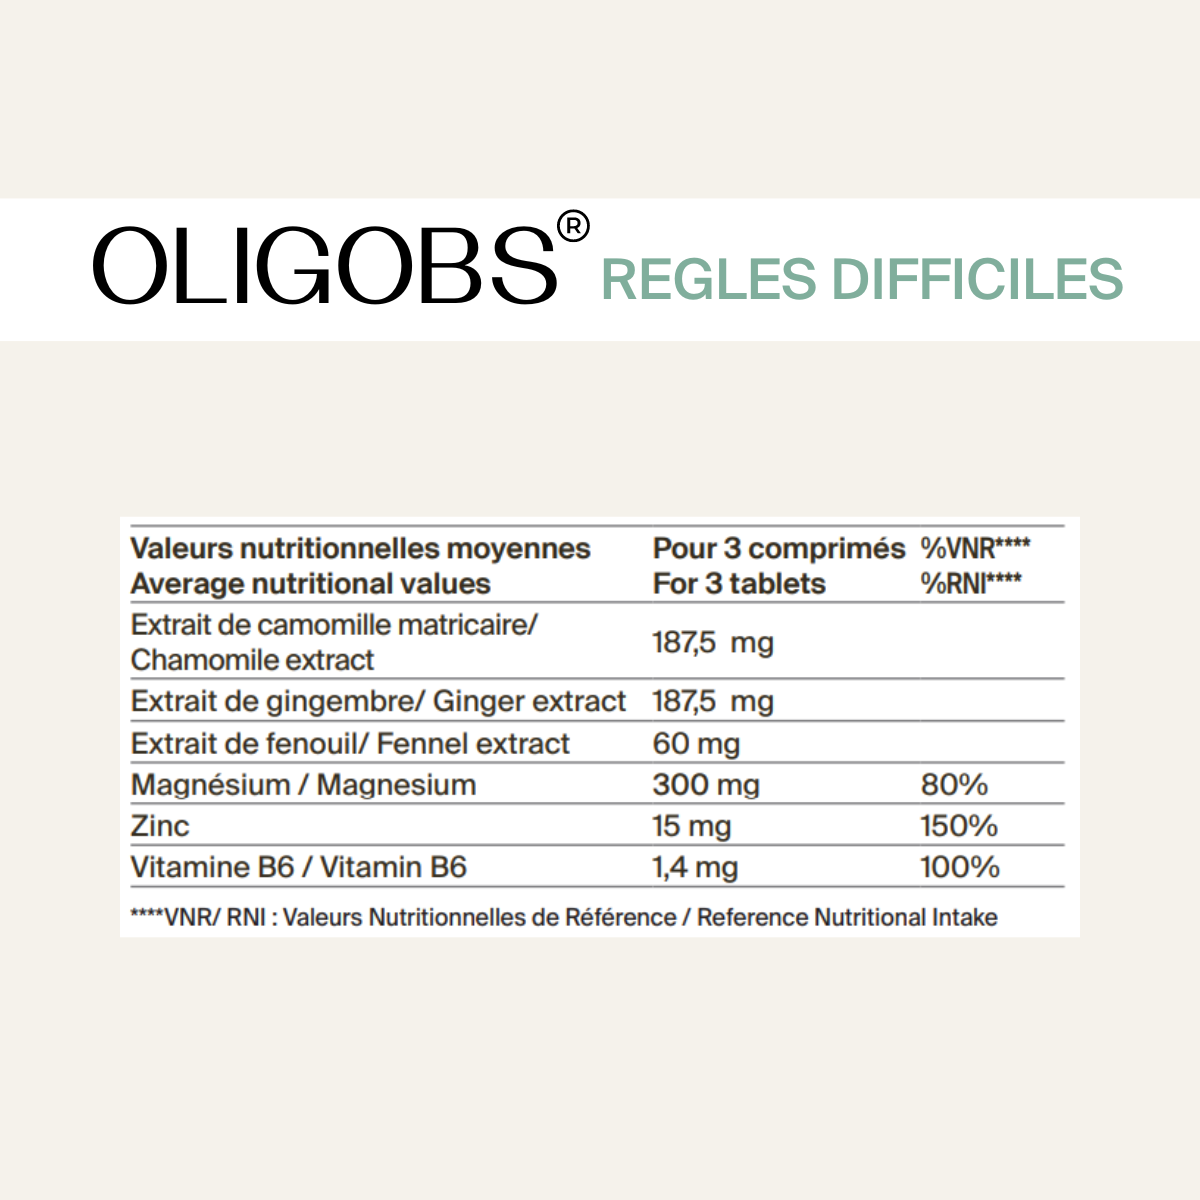 Oligobs Règles Difficiles - 1 Cycle